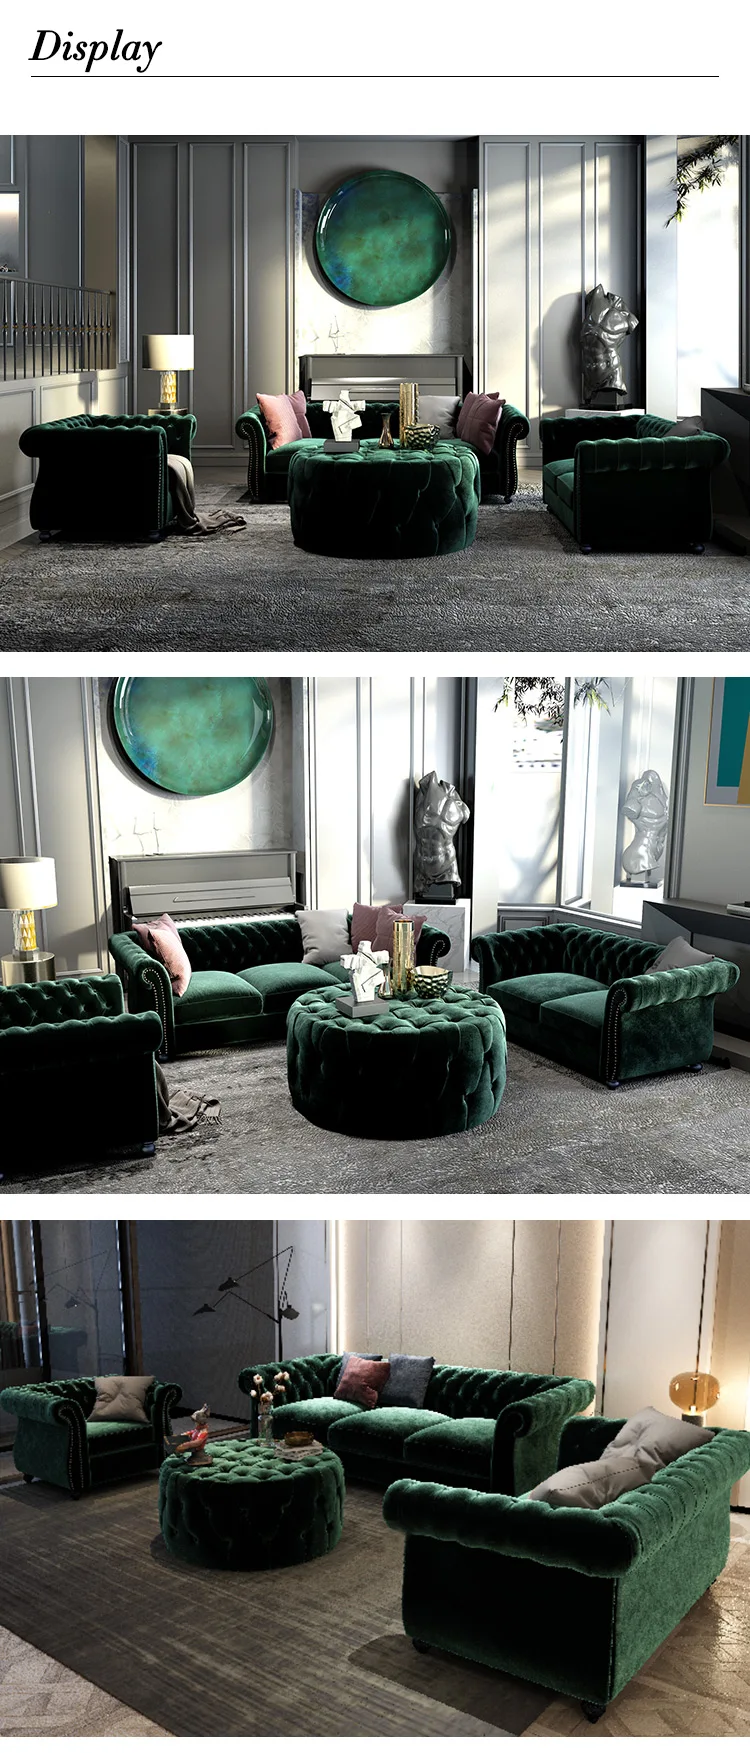 Free shipping within U.S Living Room Modern Chesterfield Sofa Tufted Velvet Sofa Set Furniture